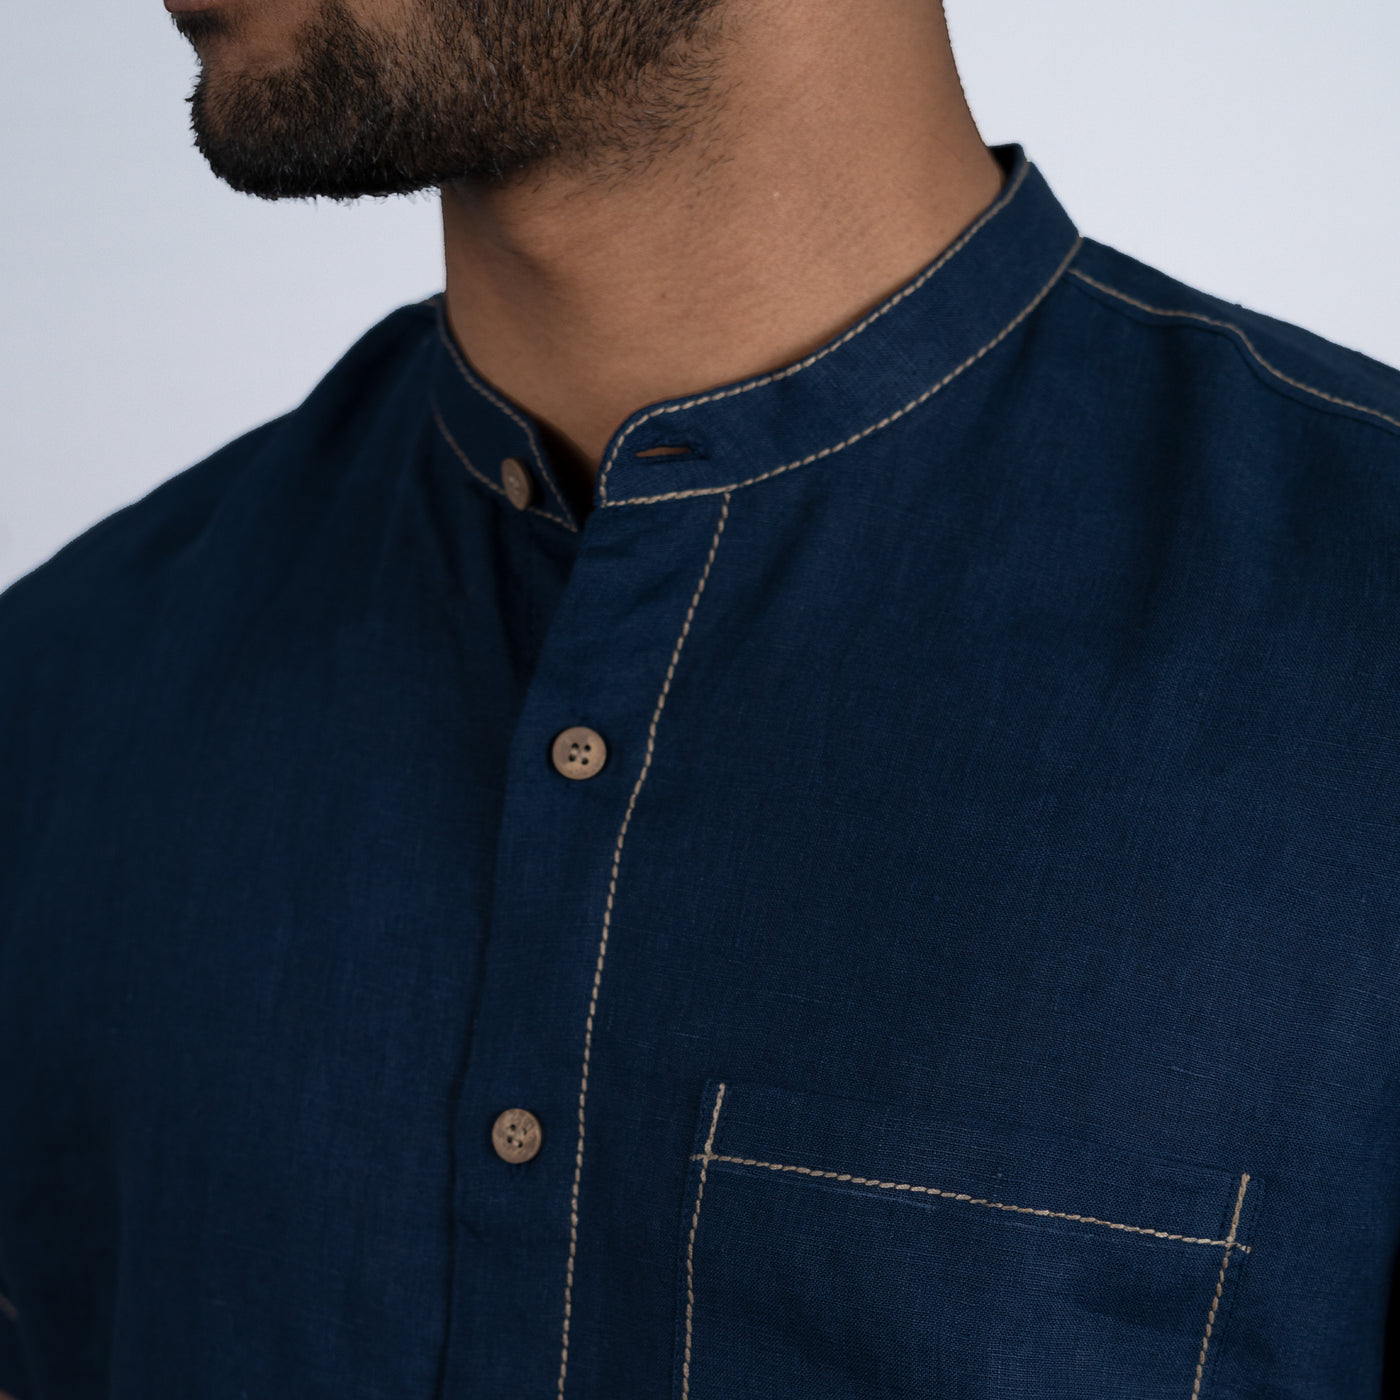 Desmond - Denim Blue Shirt